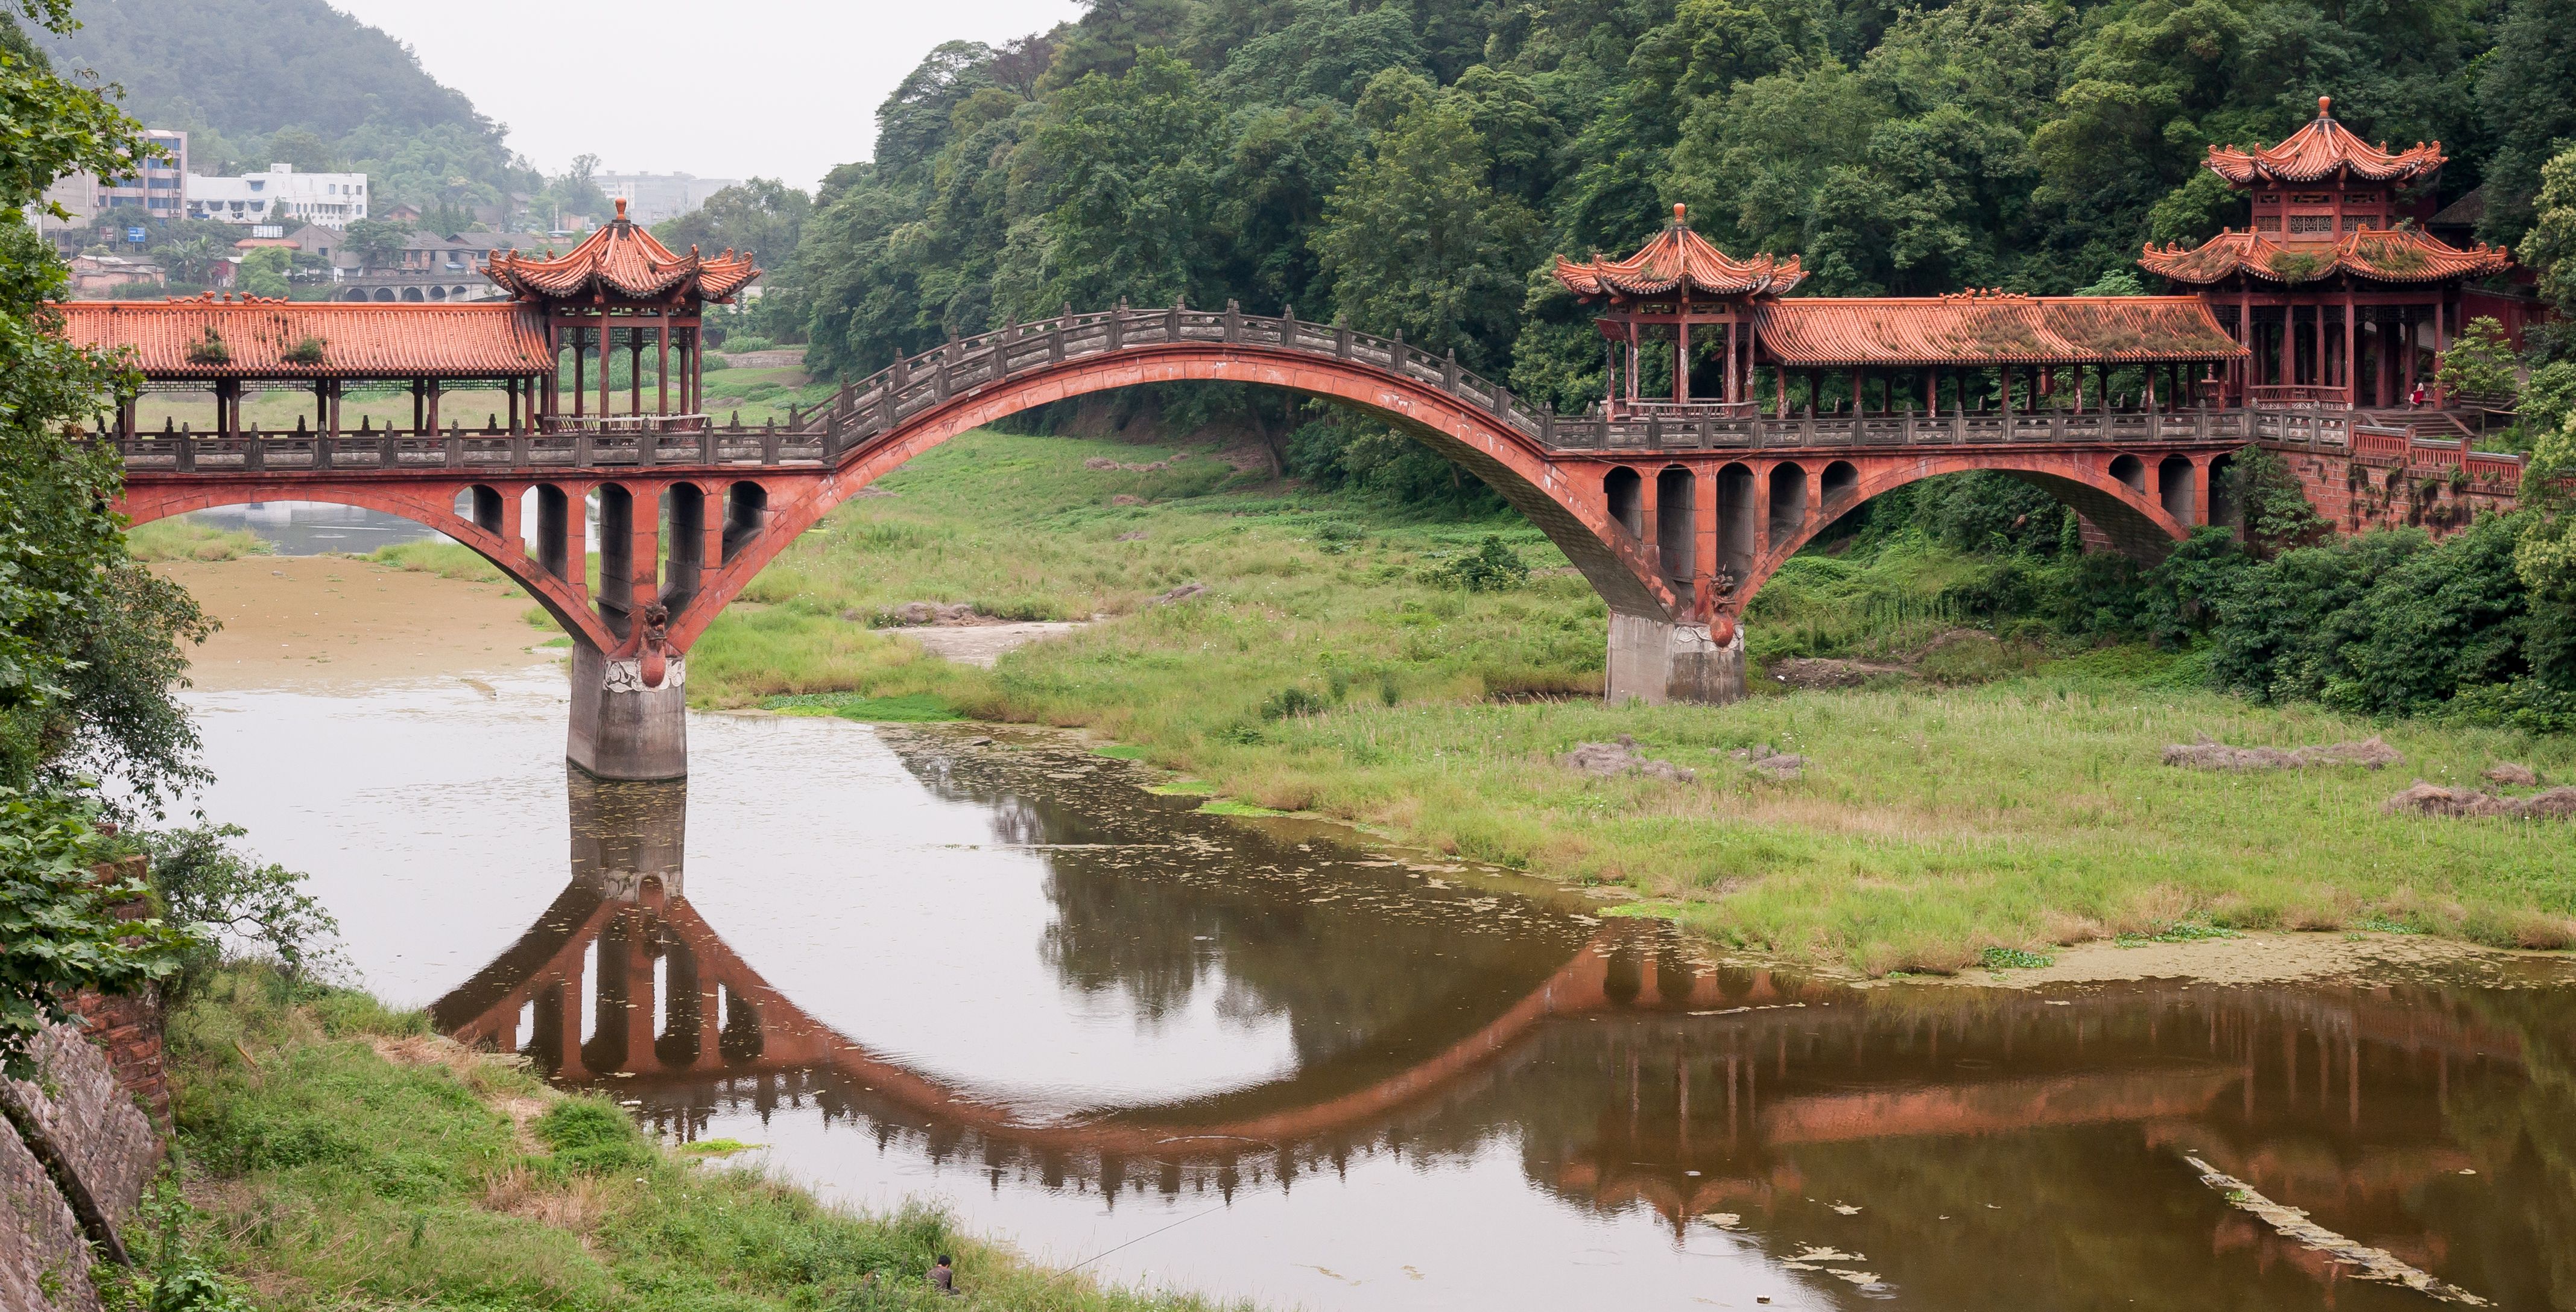 River Pedestrian China Leshan Bridge Greenery Mountains Architecture Bricks Chinese Dragon 4271x2175